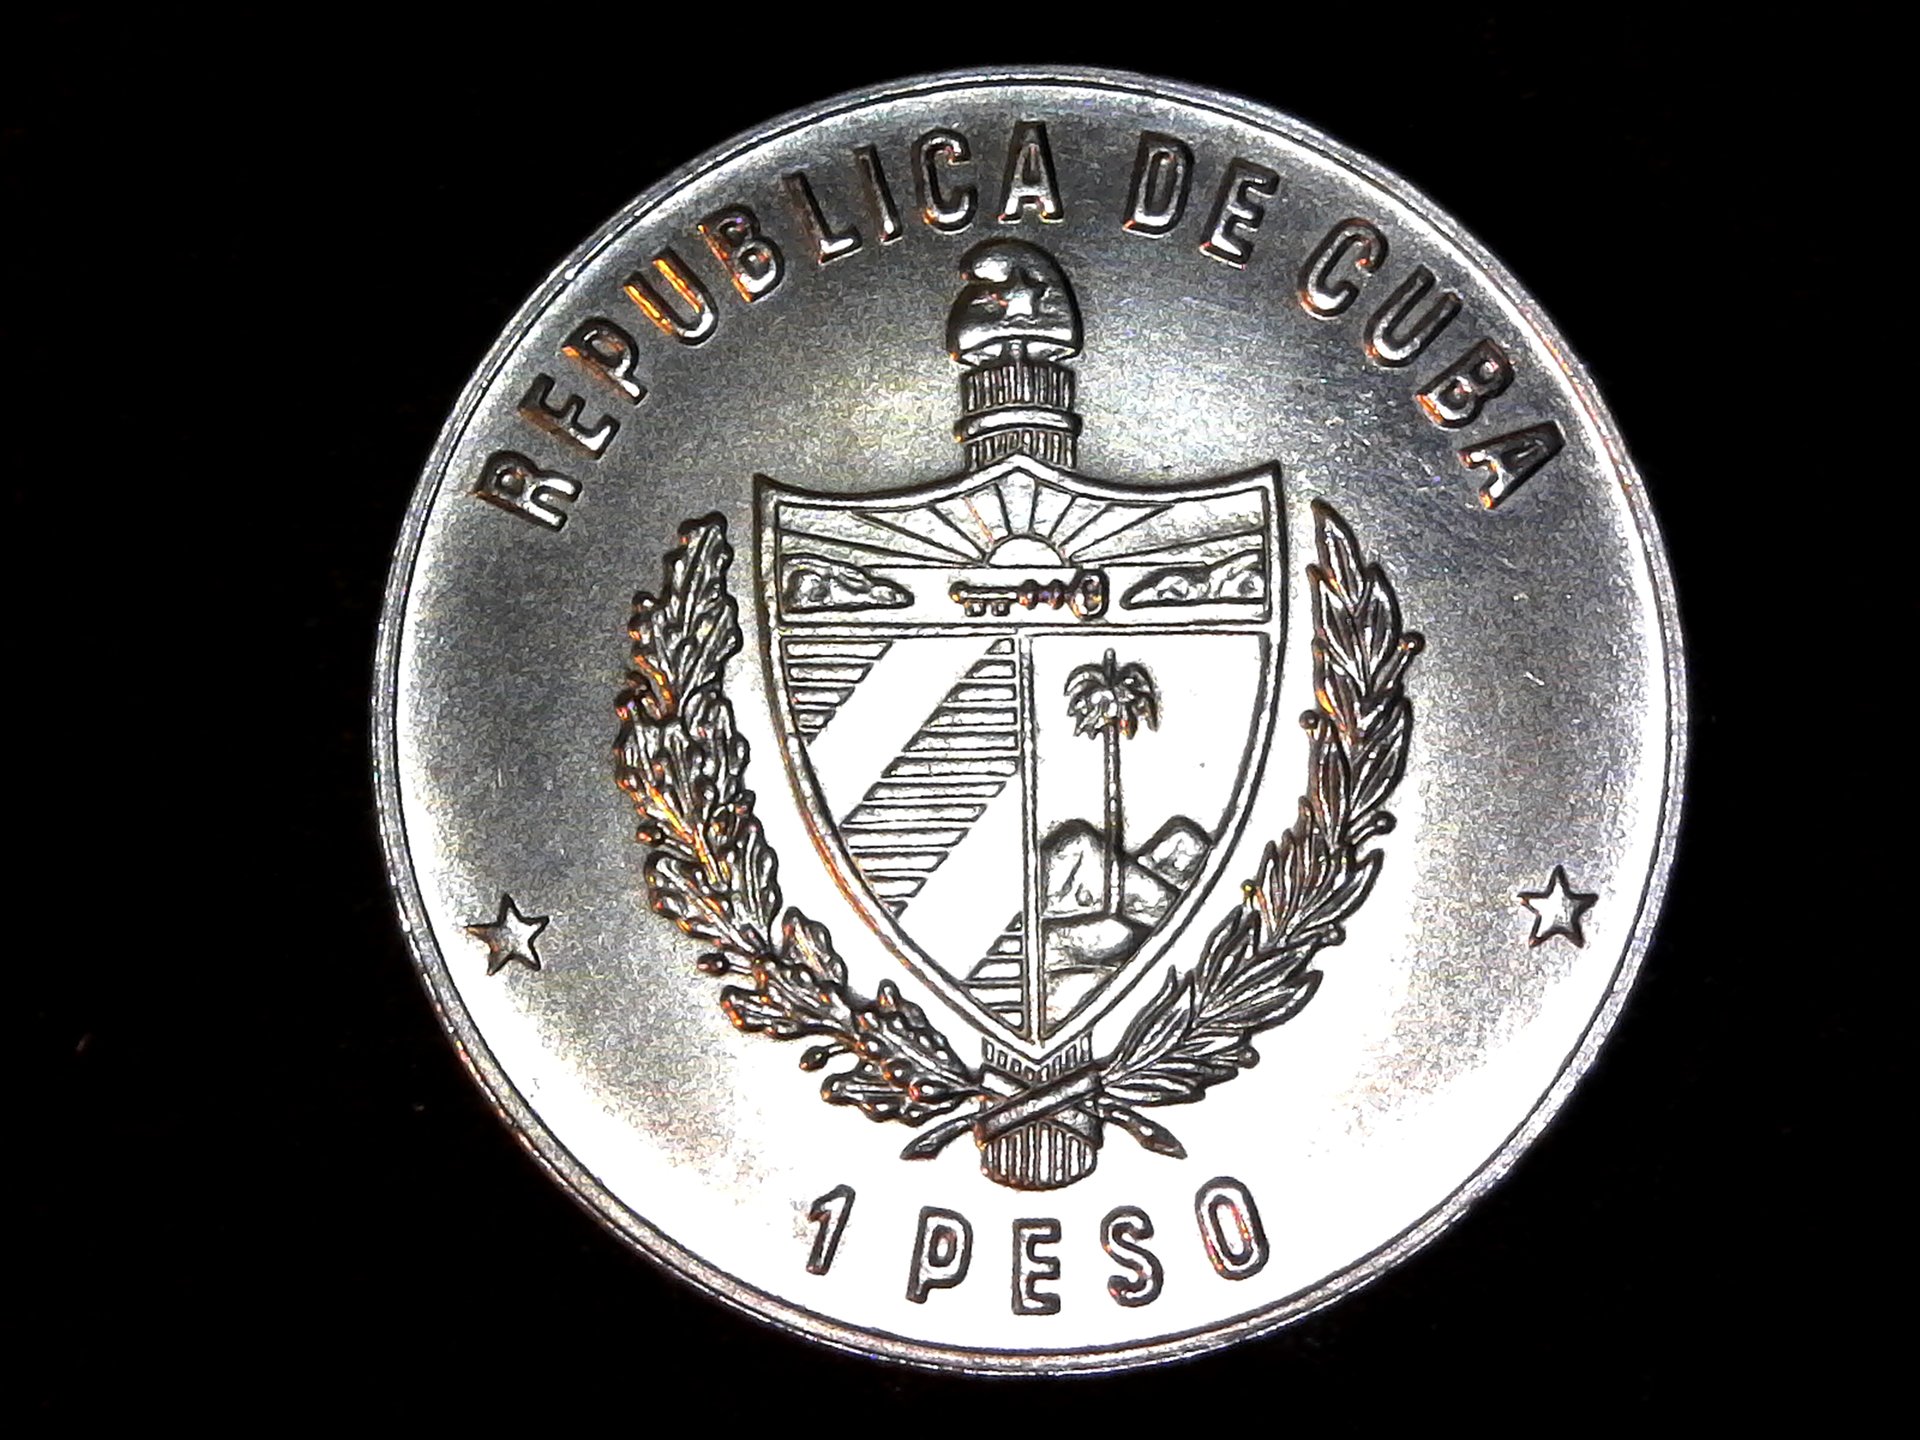 Cuba One Peso Don Quixote B1982 rev.jpg